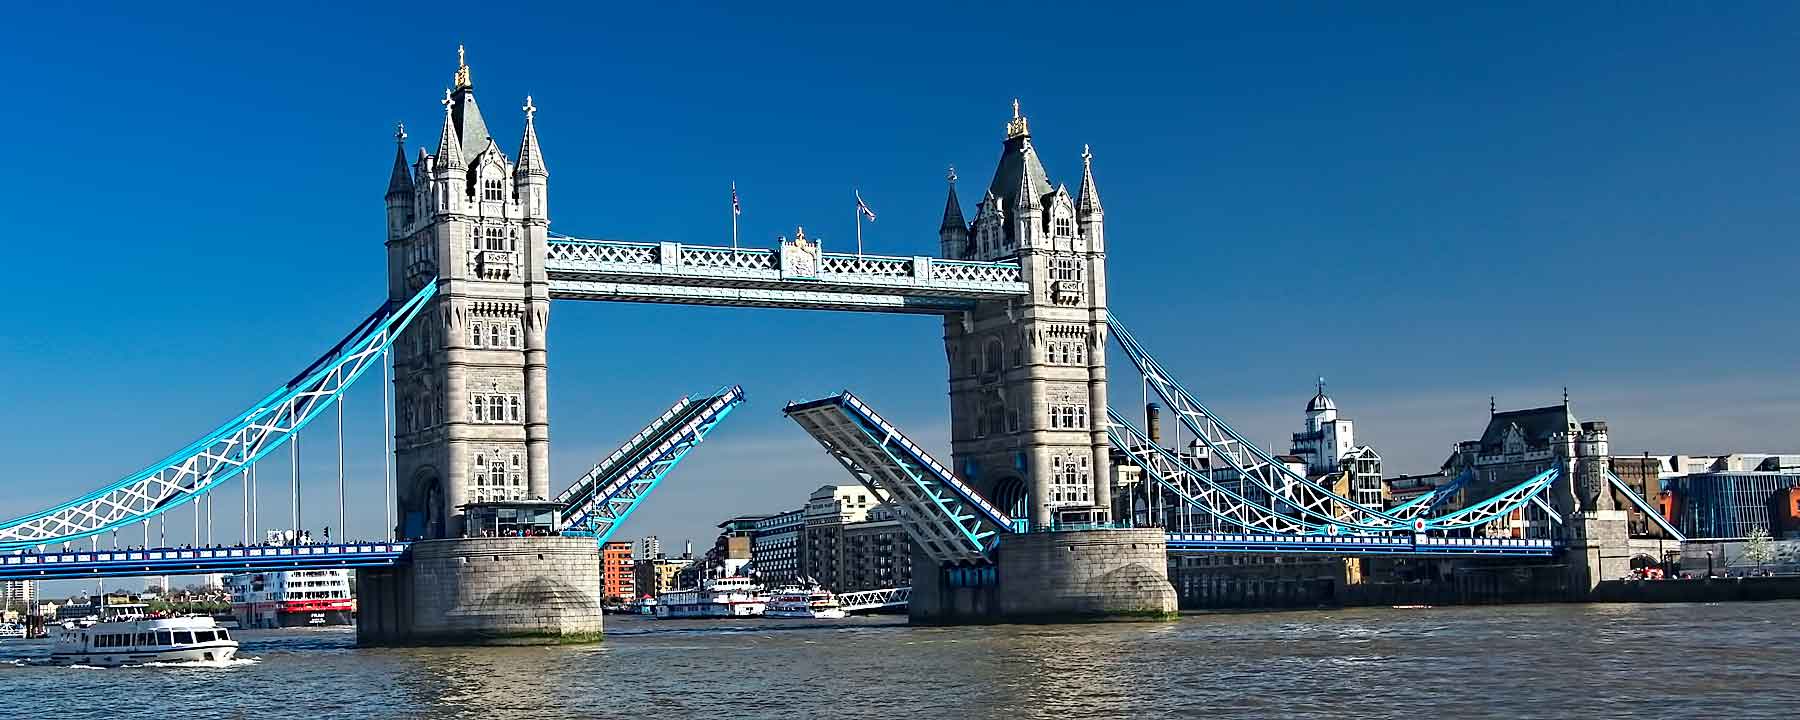 England Tower Bridge